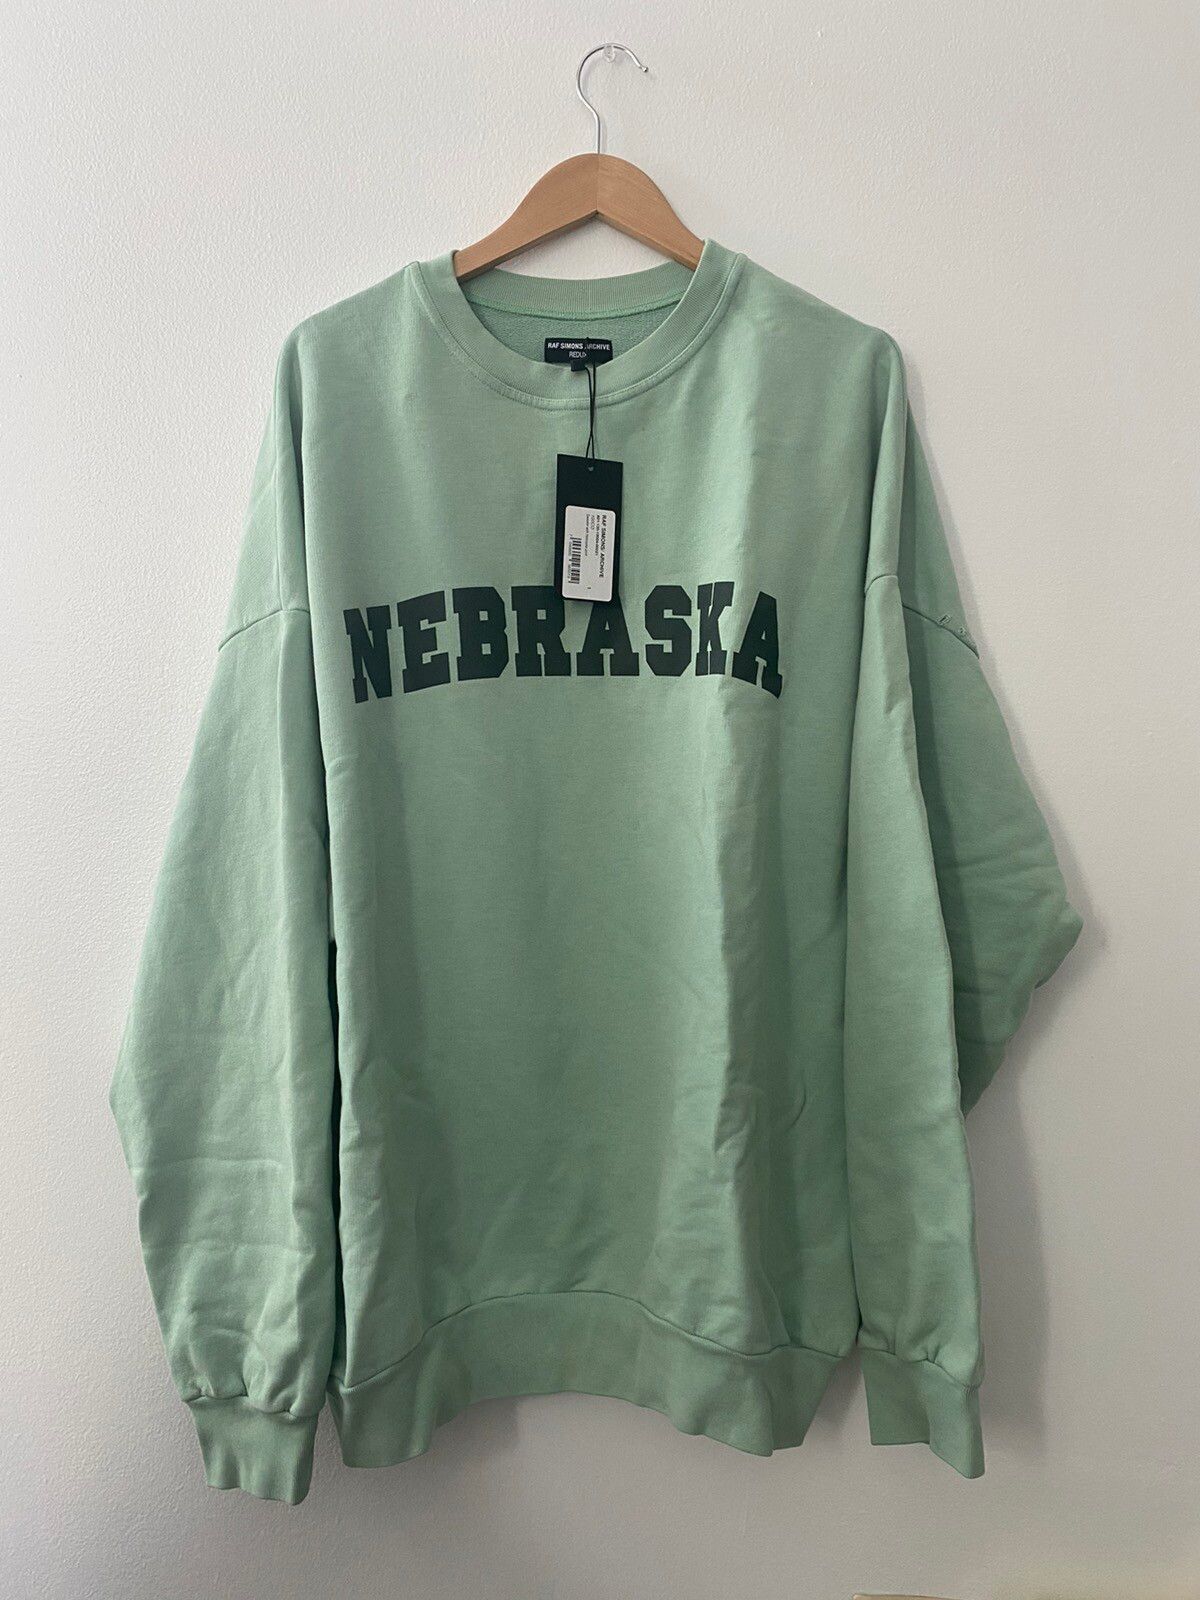 Raf Simons Raf Simons Archive Nebraska Sweatshirt Redux size 1 | Grailed